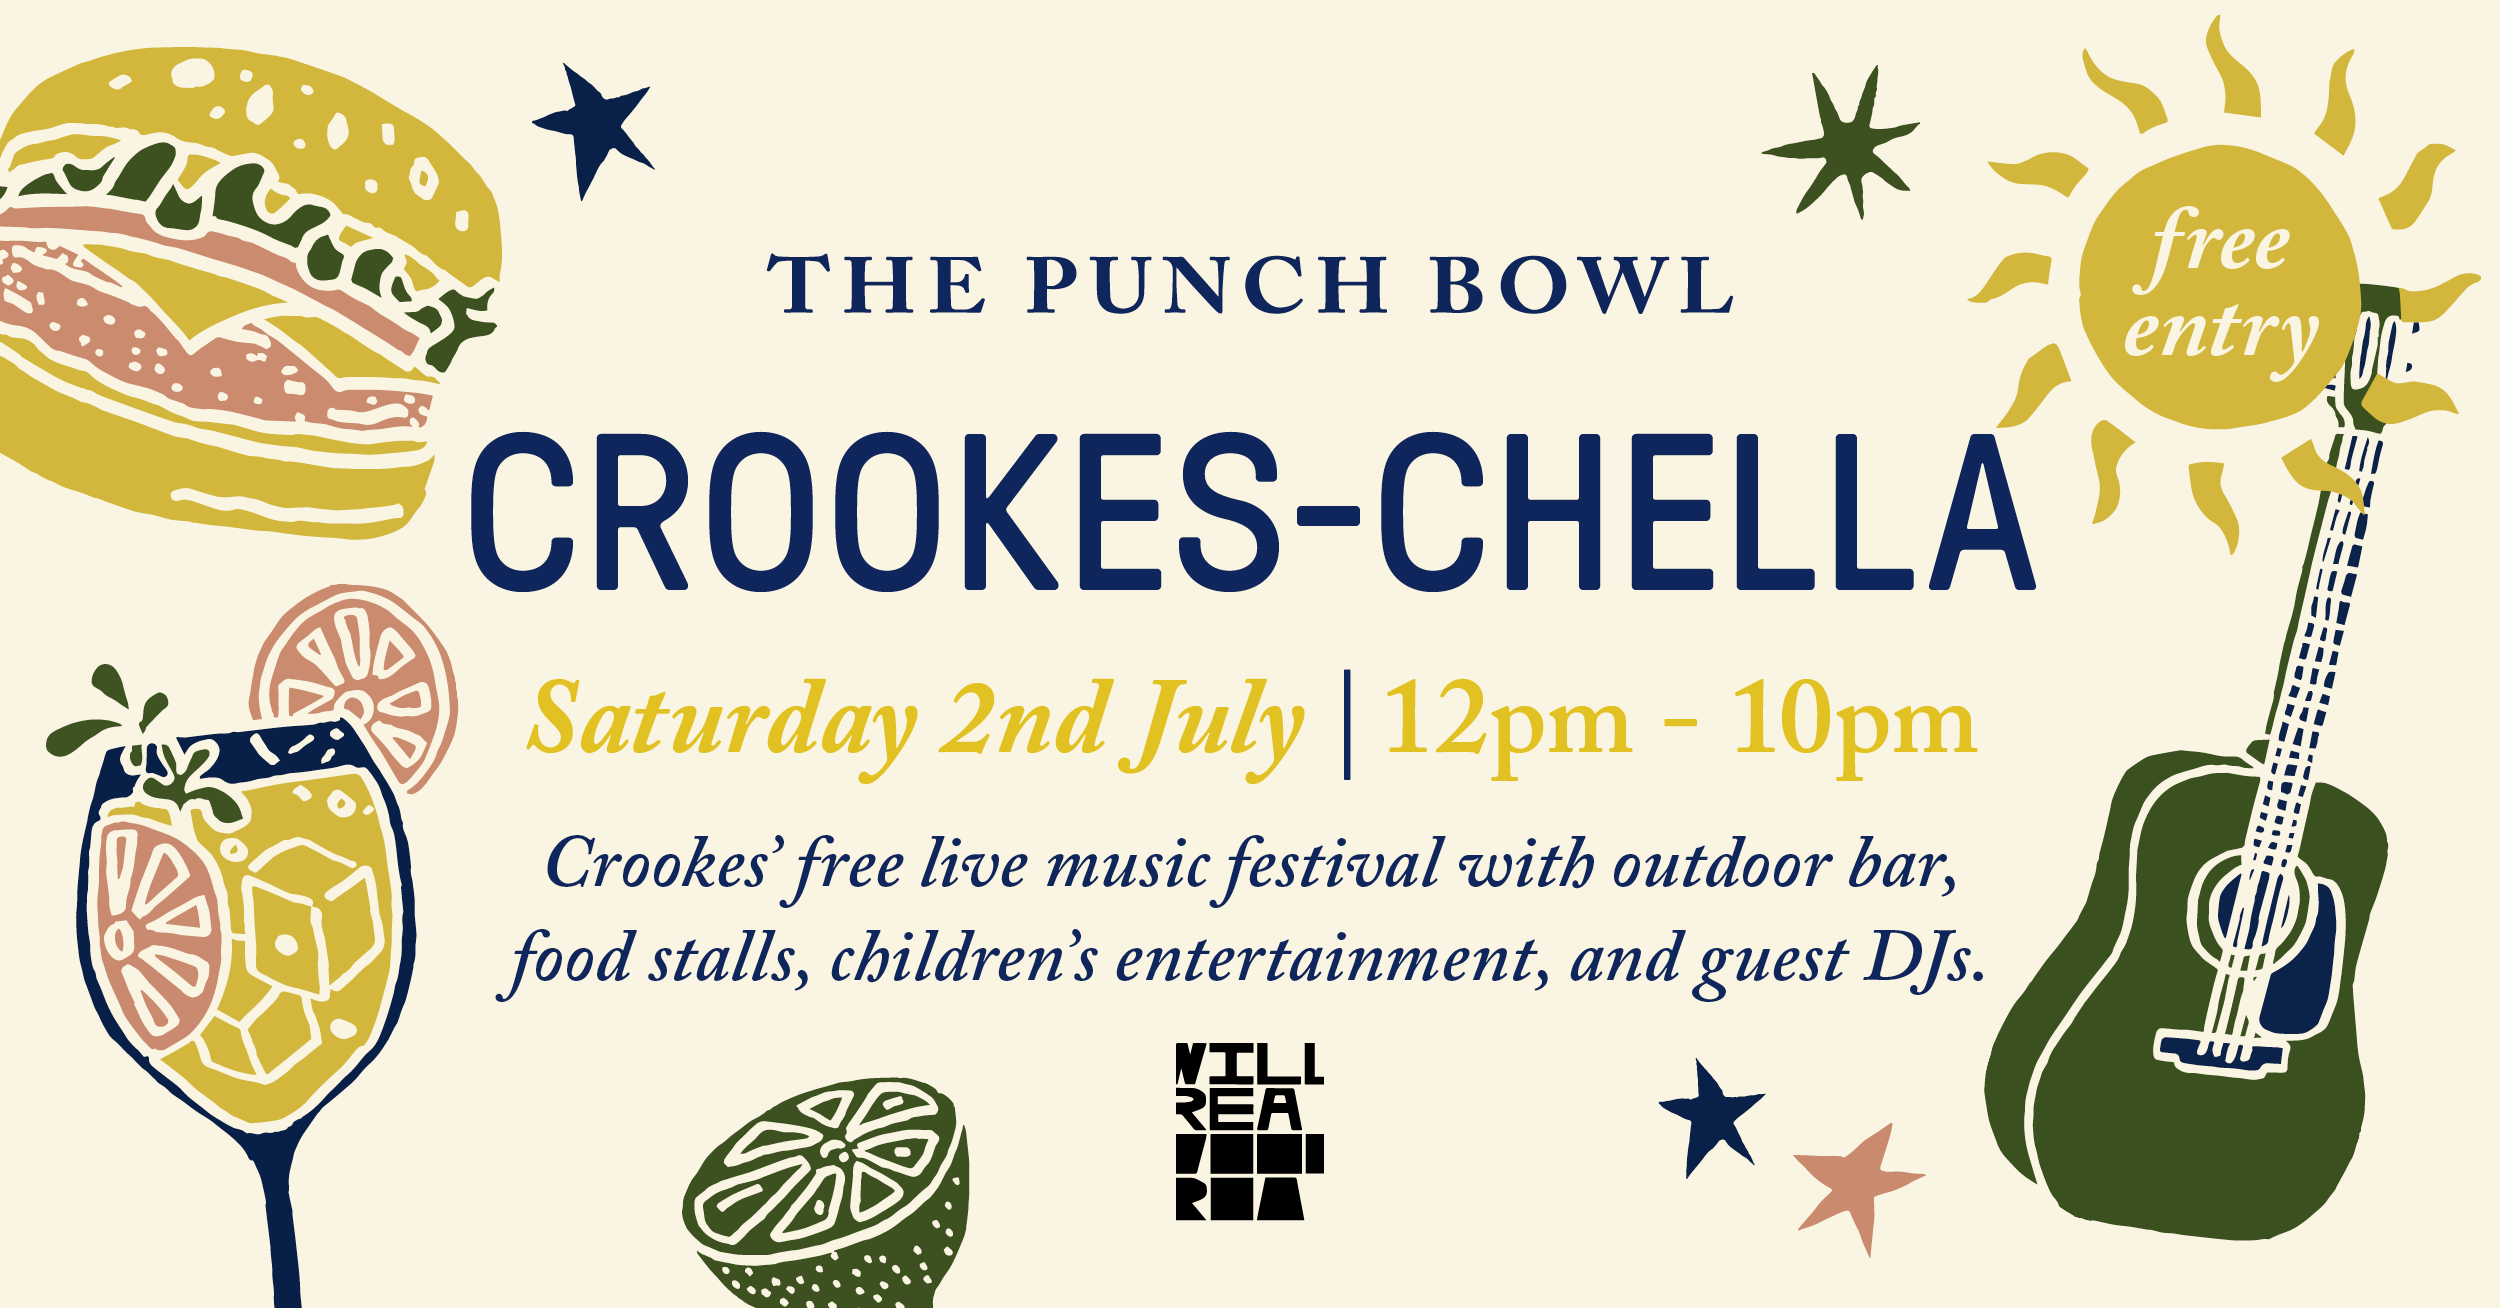 Crookes-chella at The Punch Bowl, Saturday 2nd July, 12pm - 10pm.